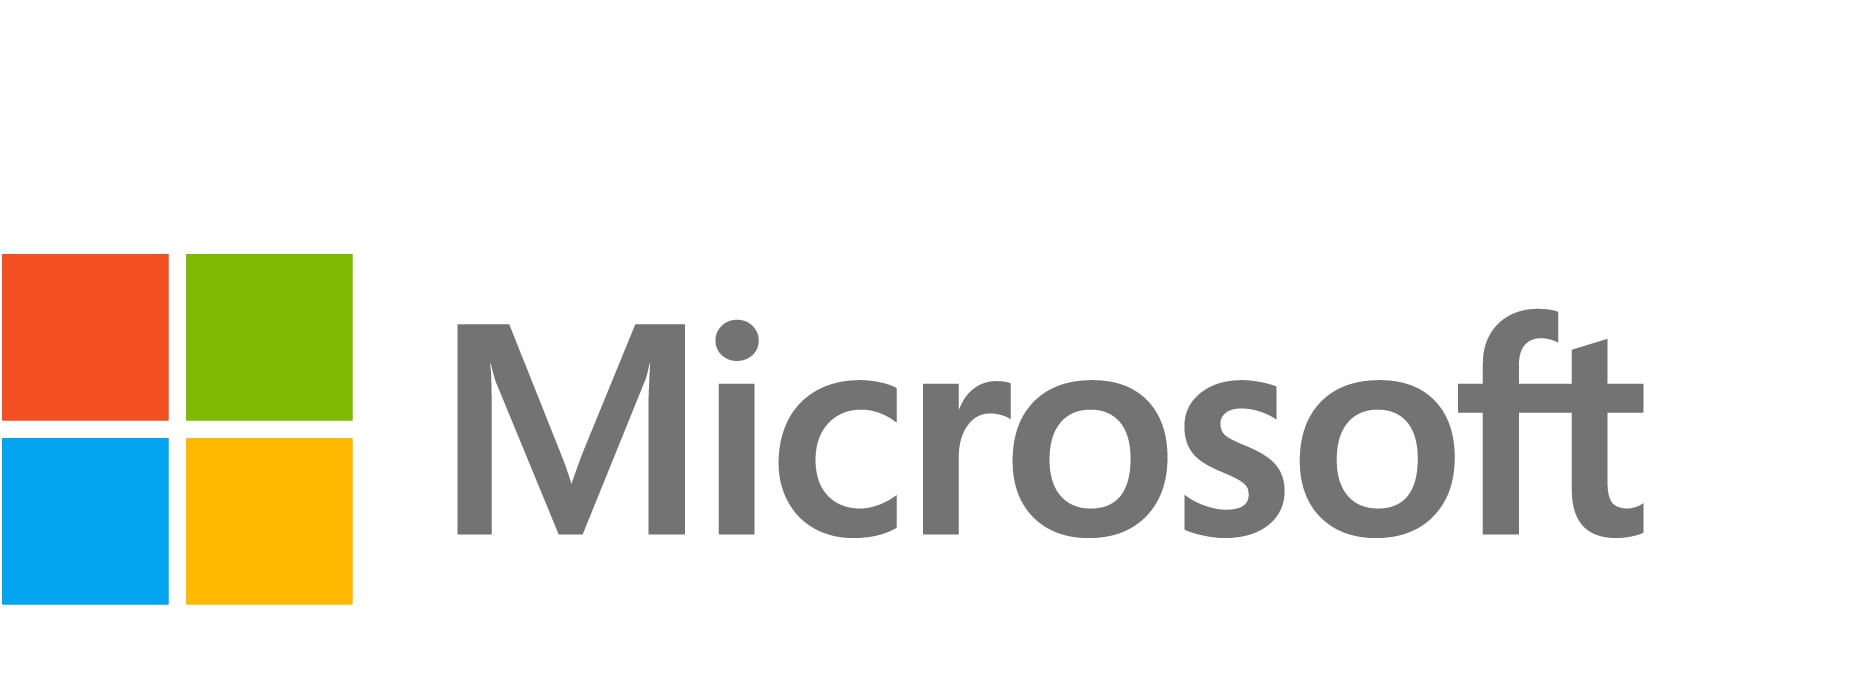 Microsoft Visio Professional - step-up license & software assurance - 1 lic